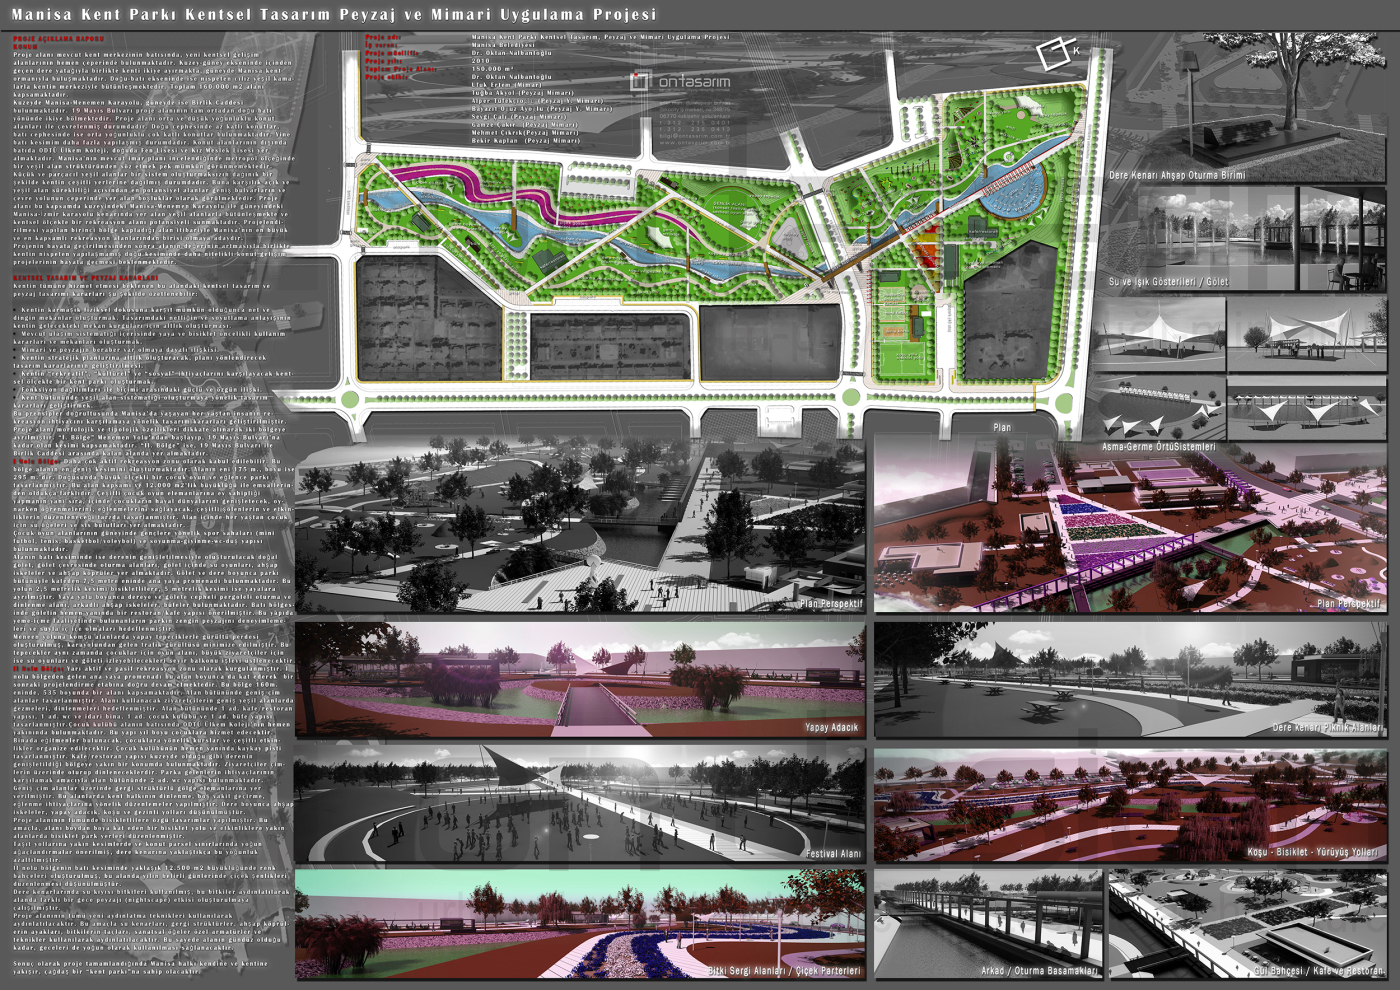 Manisa Urban Park Urban Design, Landscape & Architectural Working Projects